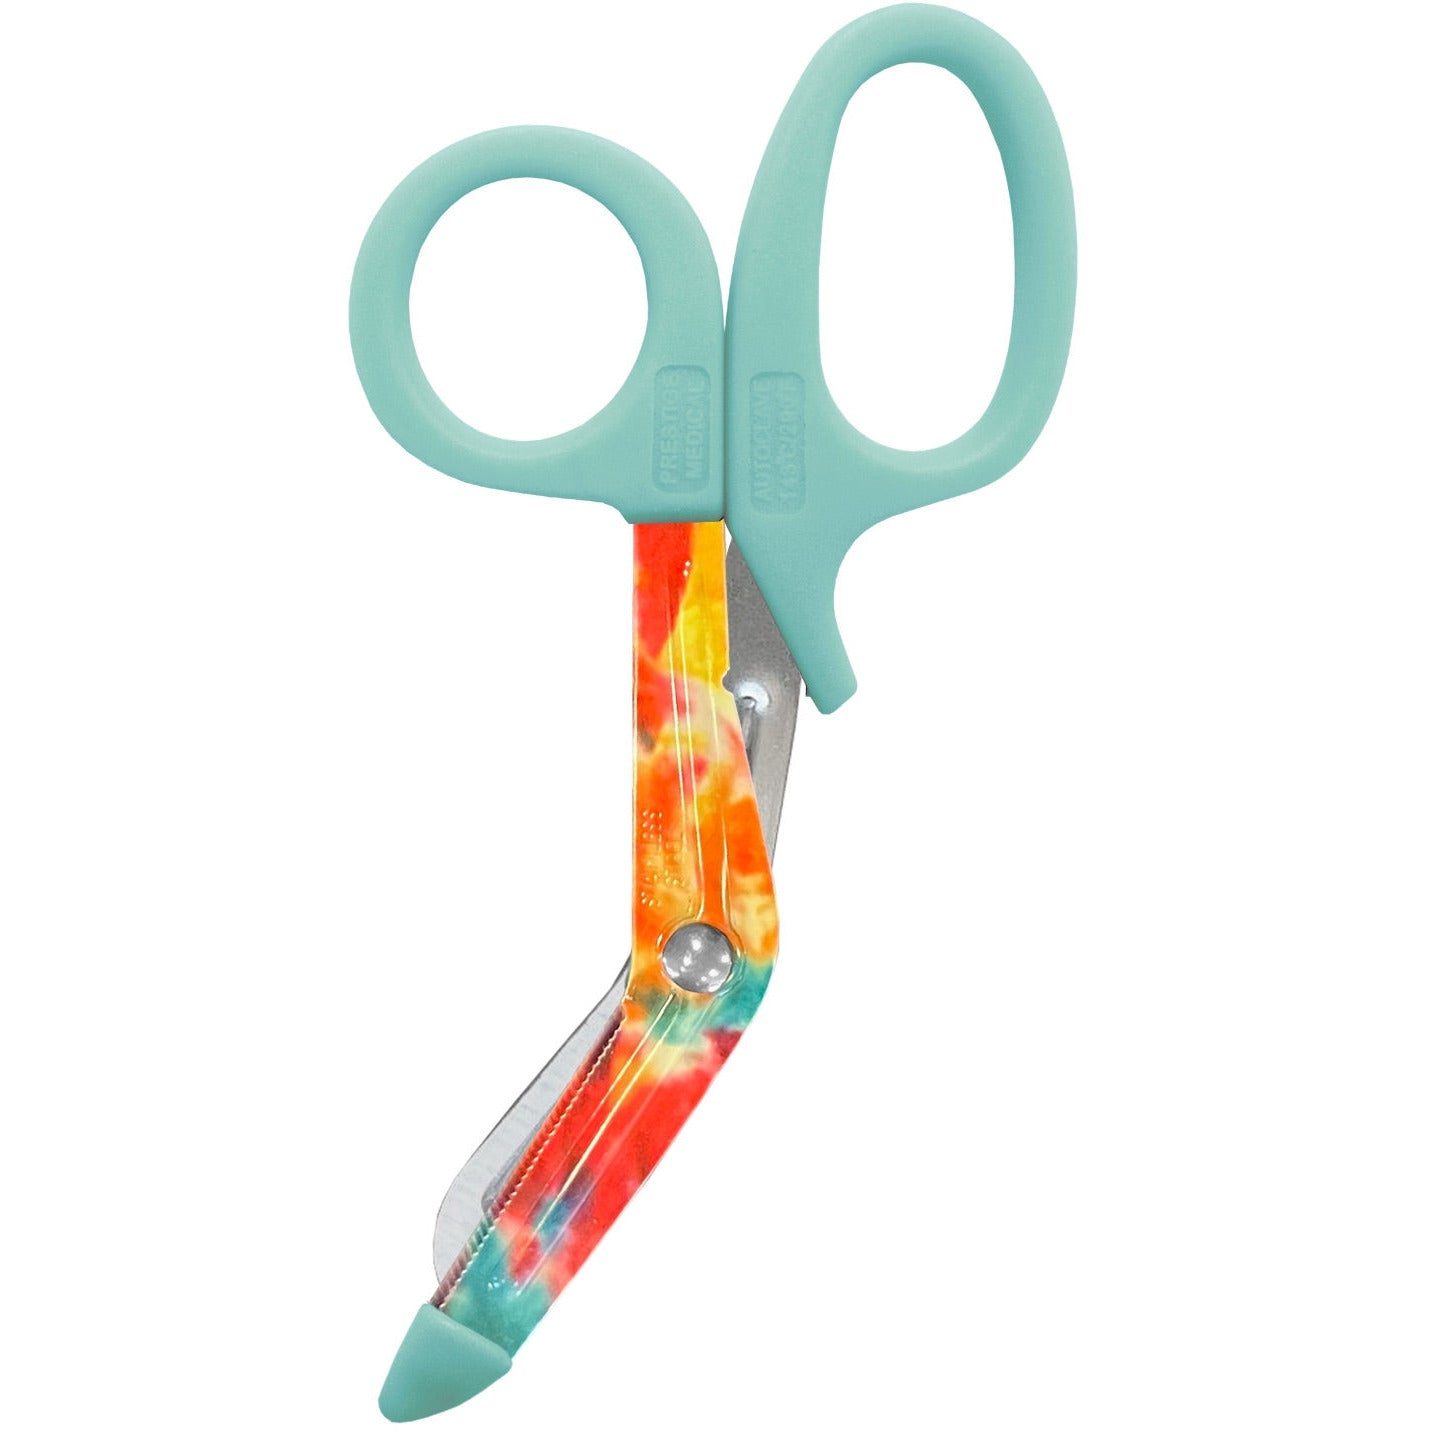 5.5" StyleMate Utility Scissors - Tie Die Pastel